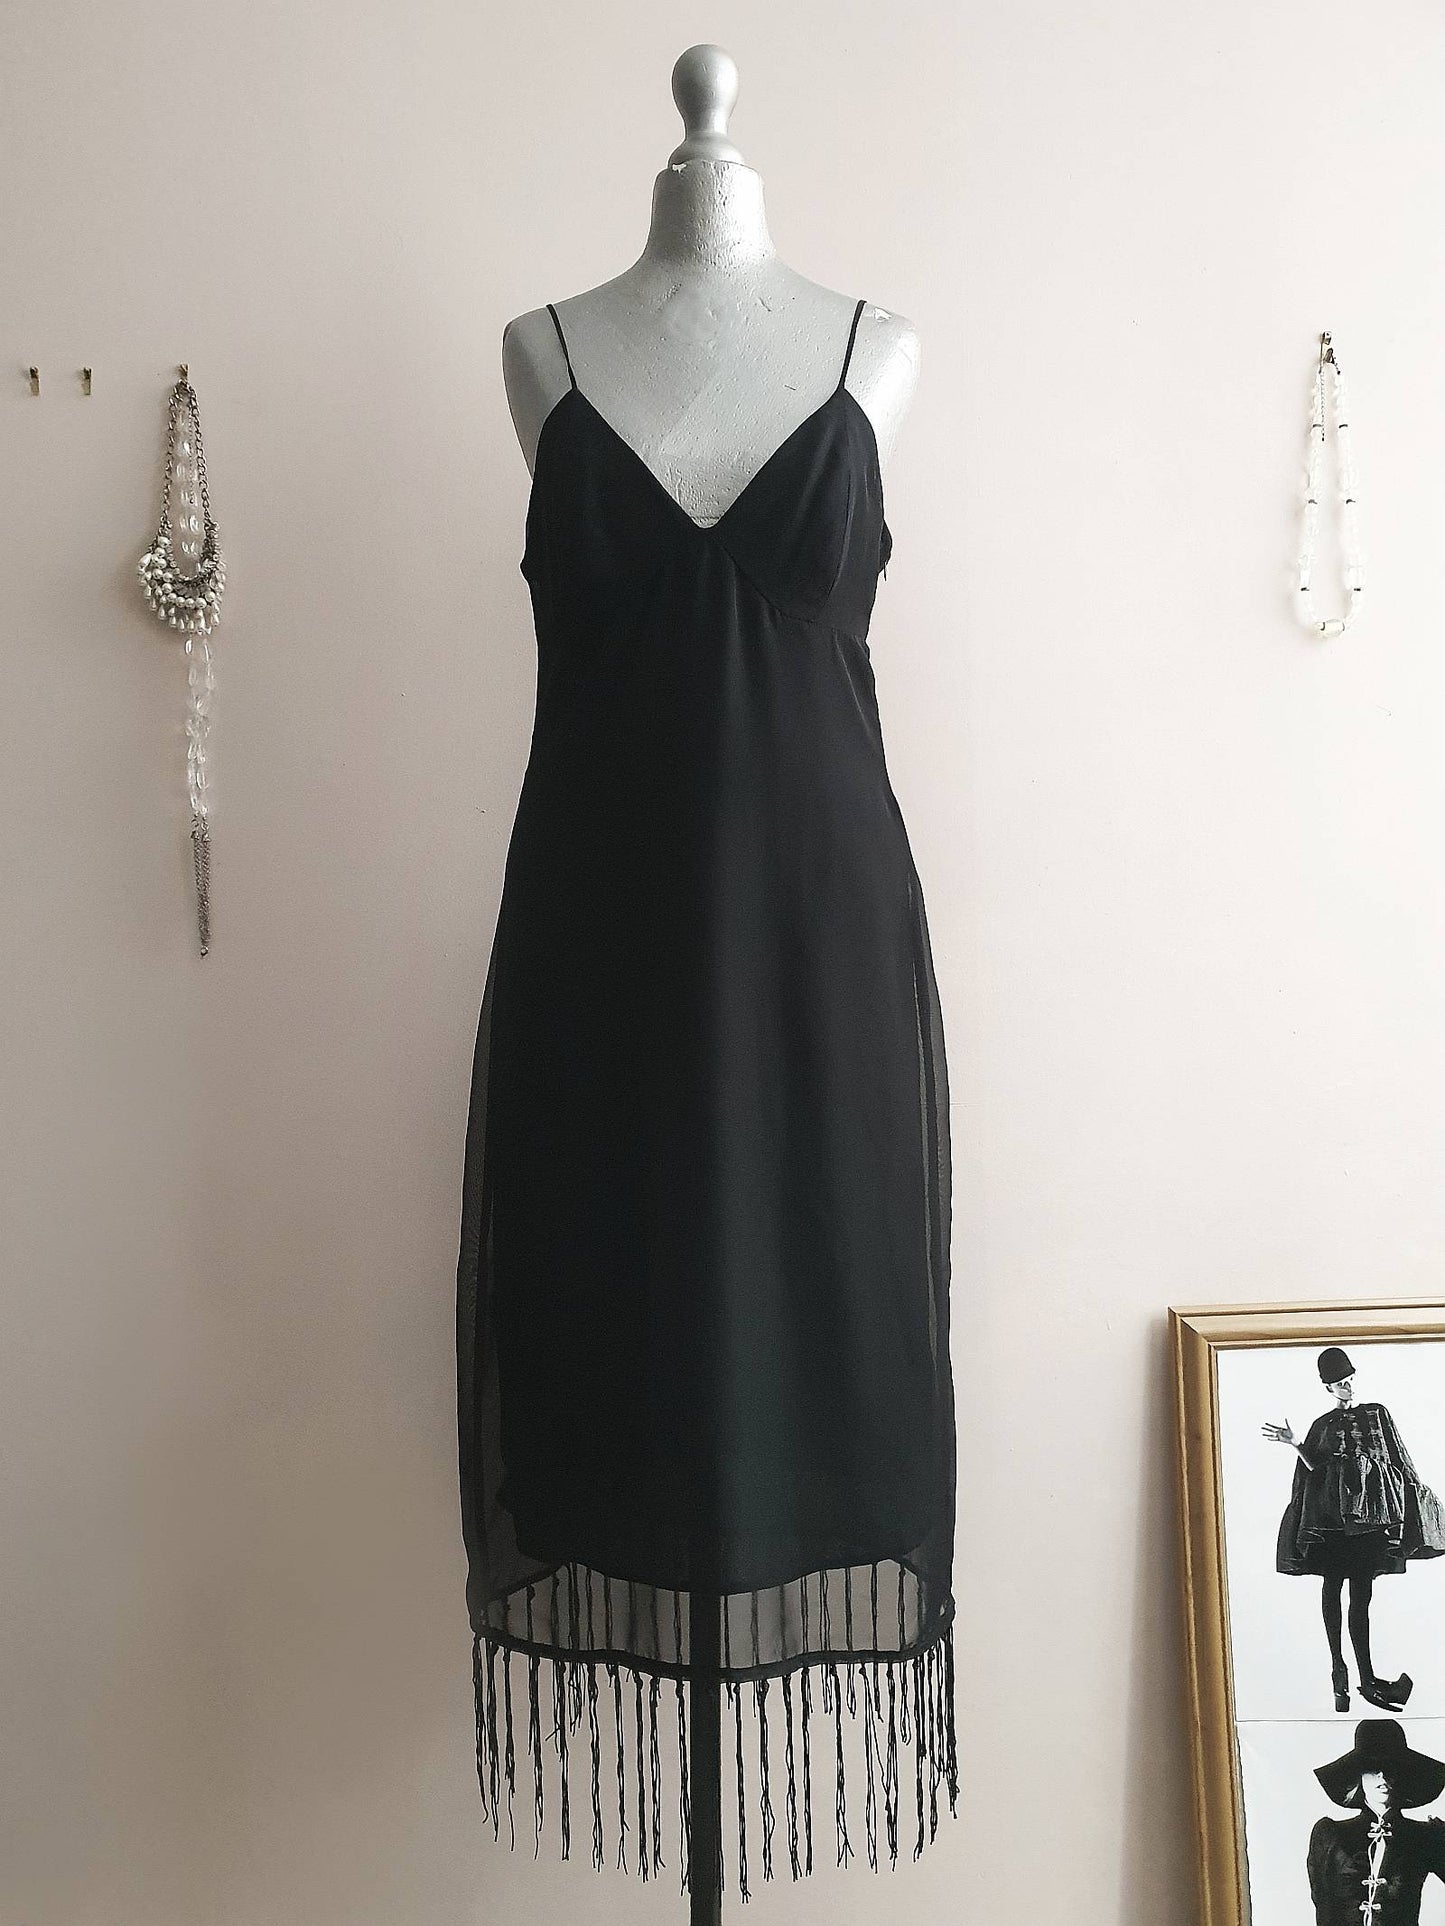 Vintage 1990s Black Chiffon Tassel Party Dress - Size 10